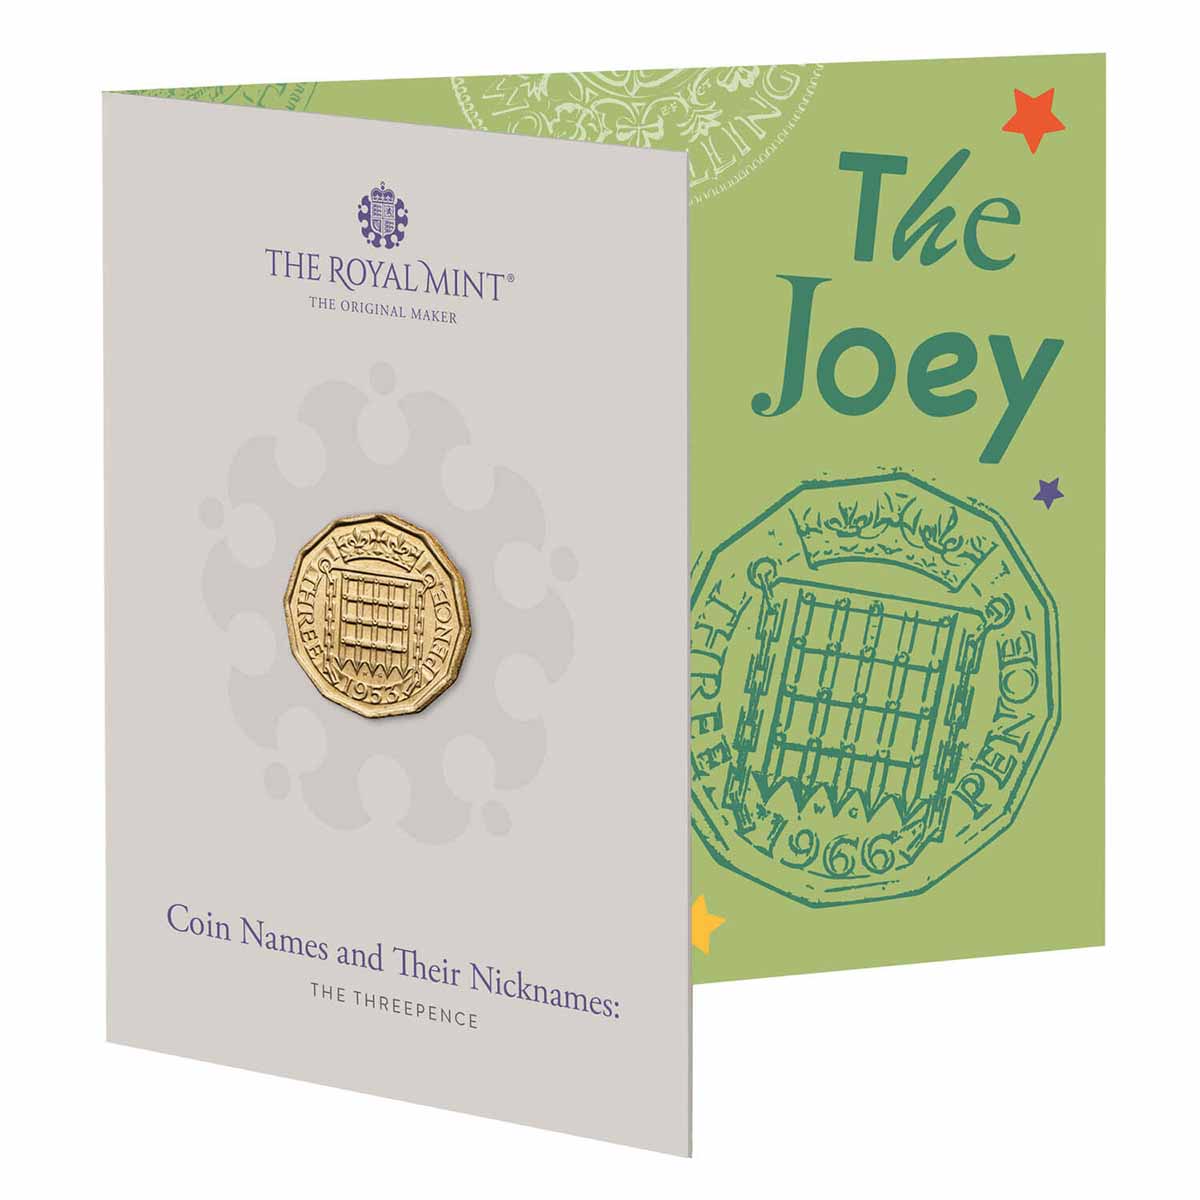 Coin Nicknames: The Threepence - Joey